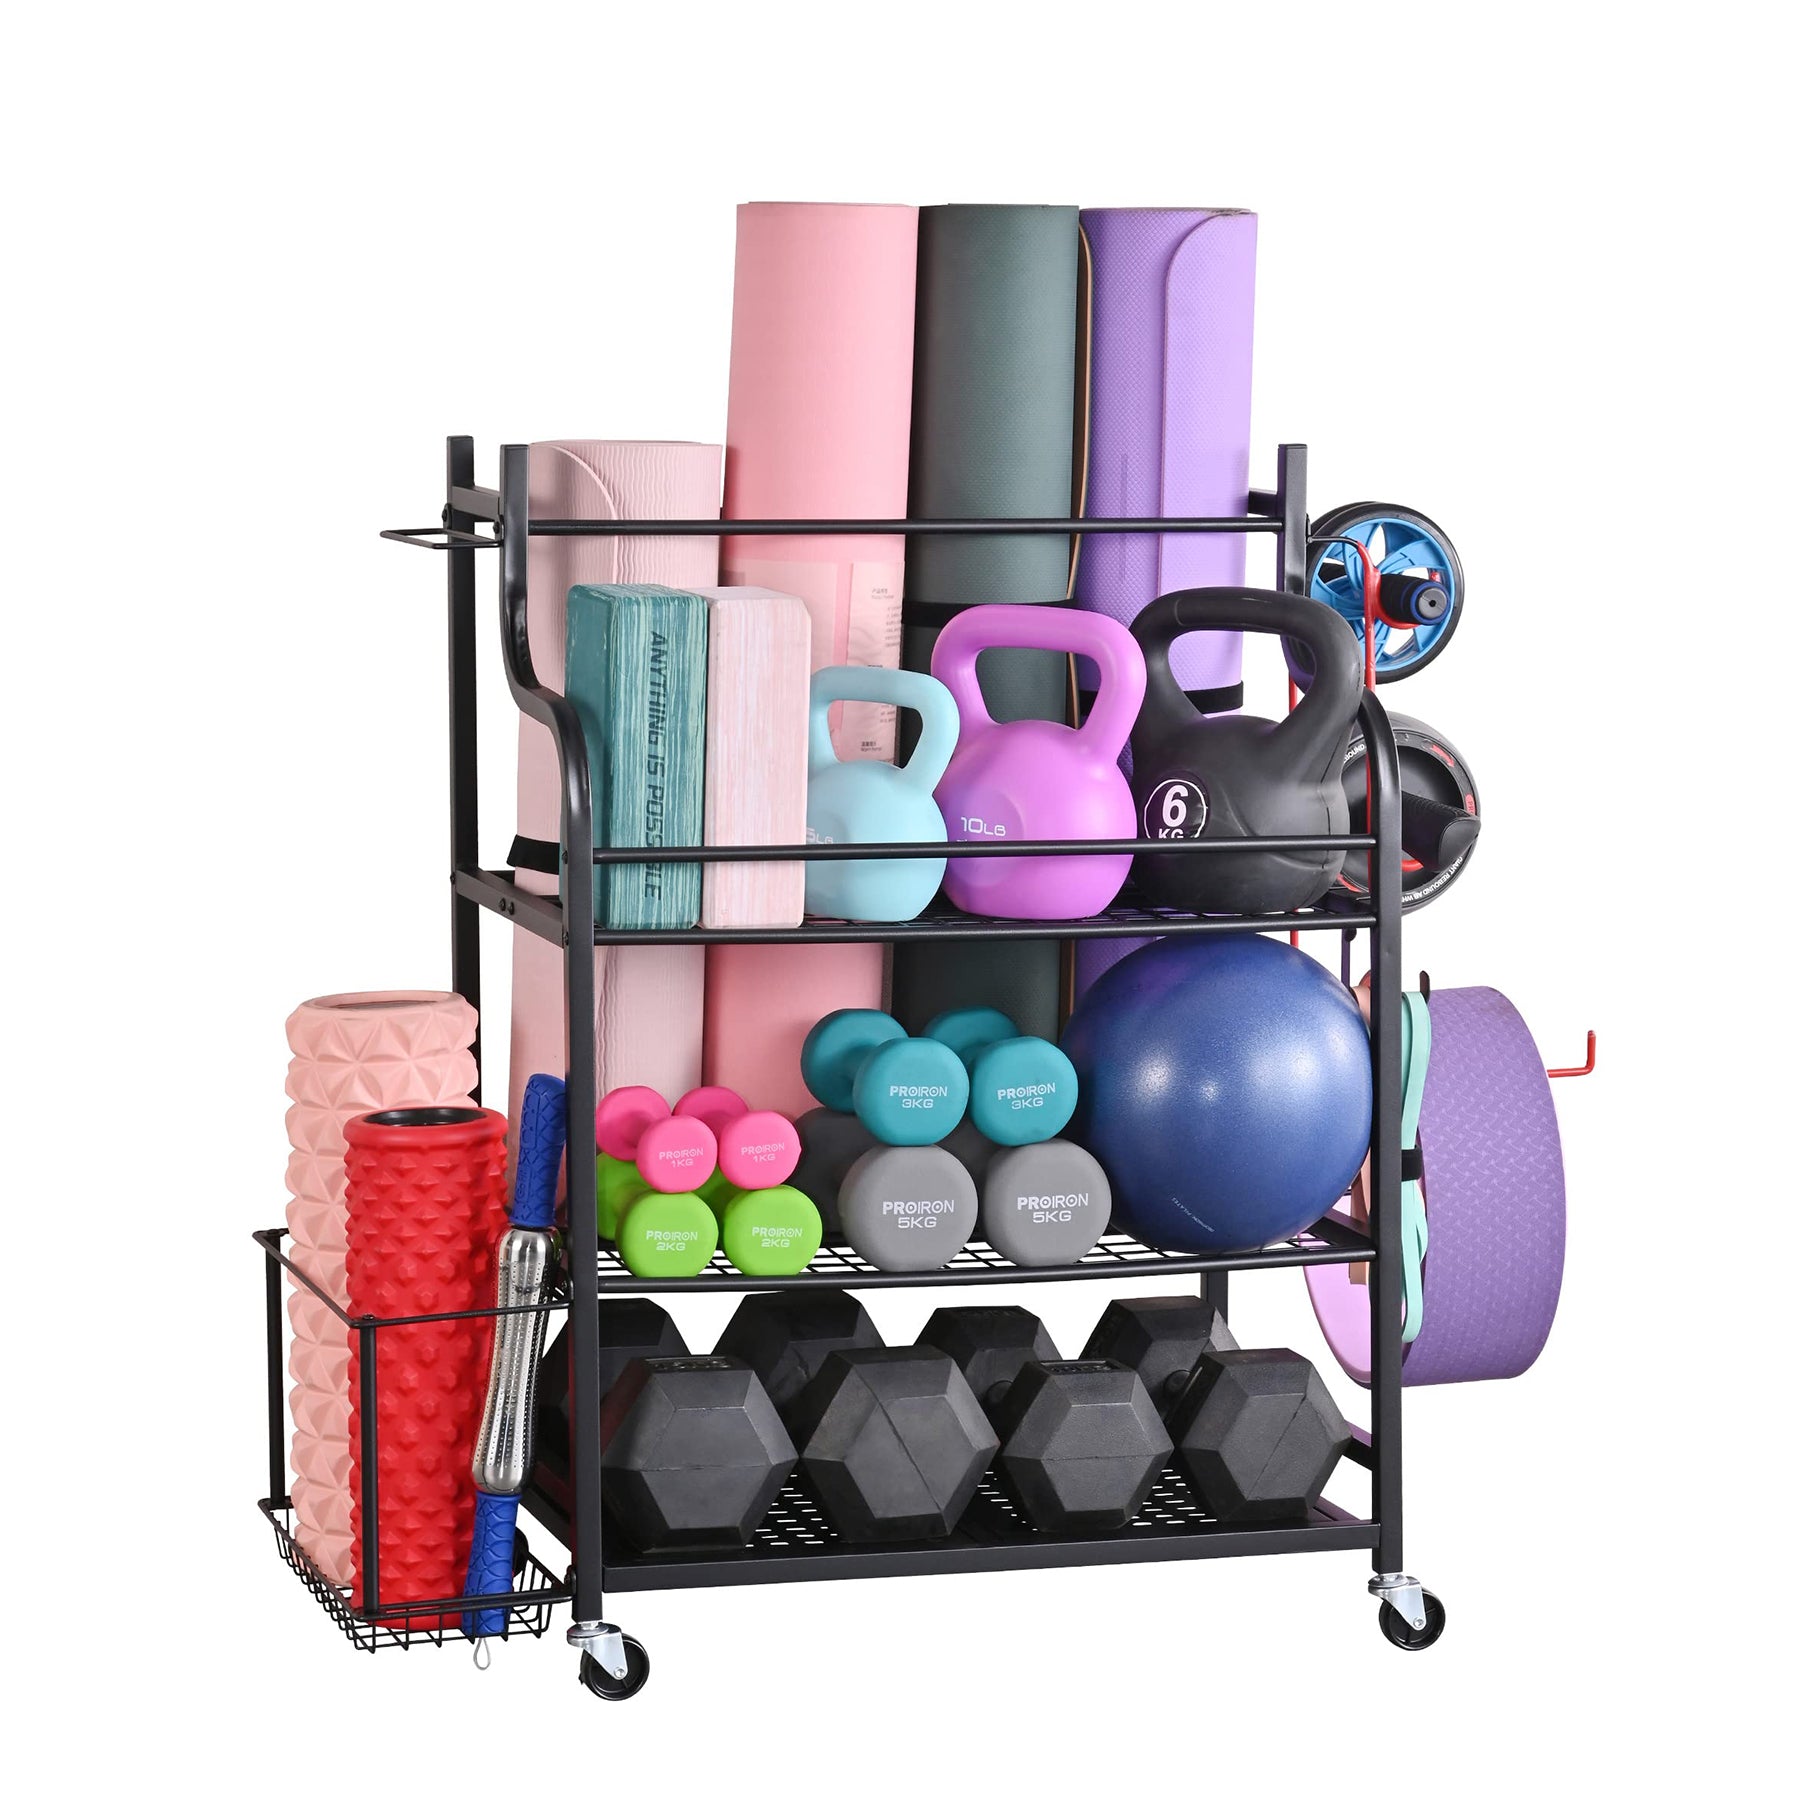 Mythinglogic Yoga Mat Storage Racks, Home Gym Weight Rack Storage for ...